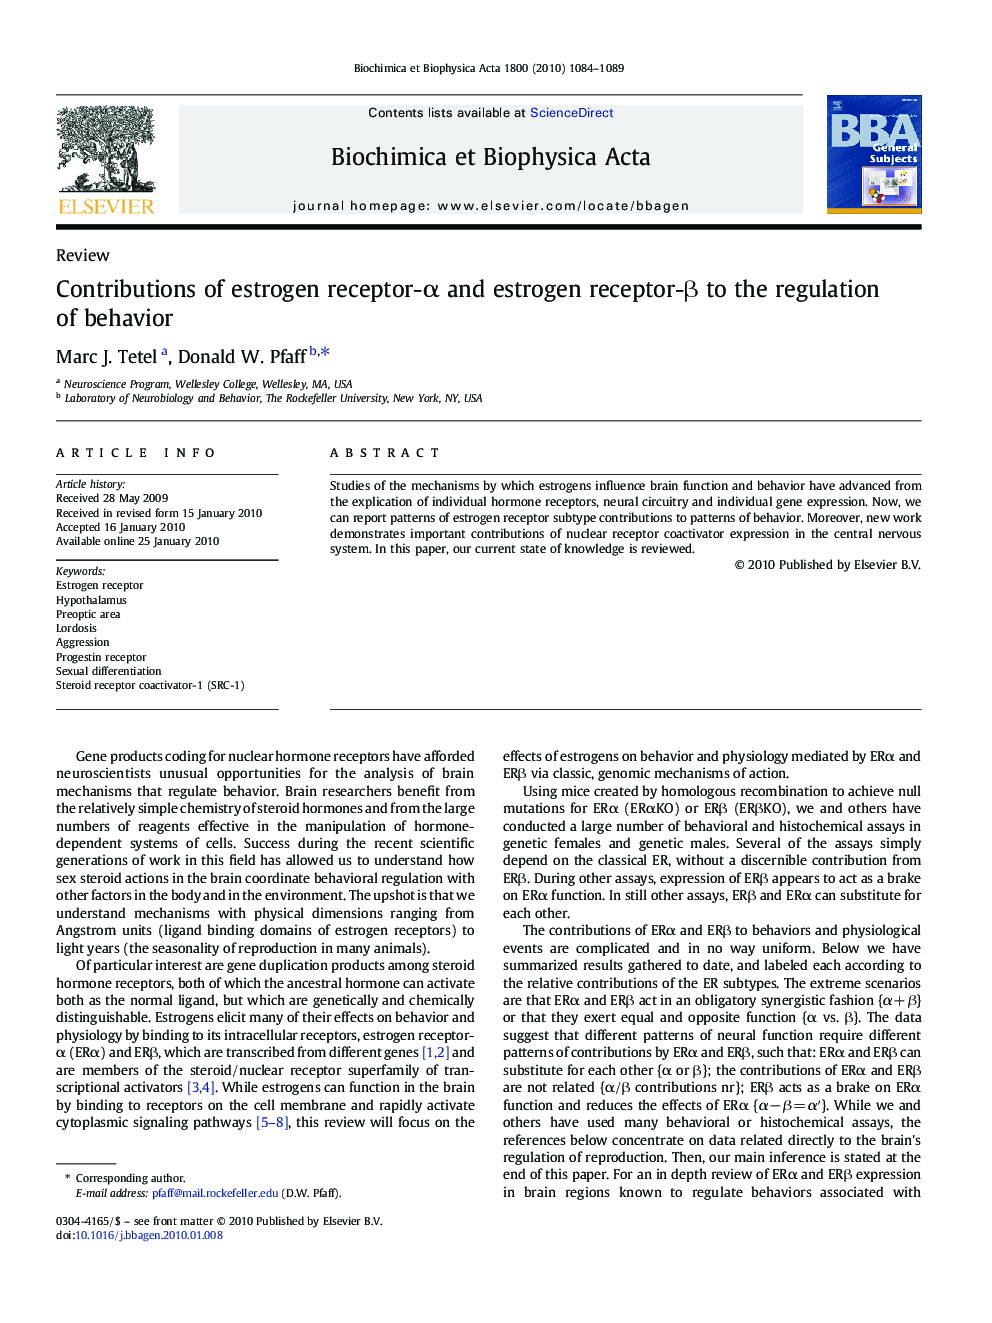 Contributions of estrogen receptor-α and estrogen receptor-β to the regulation of behavior